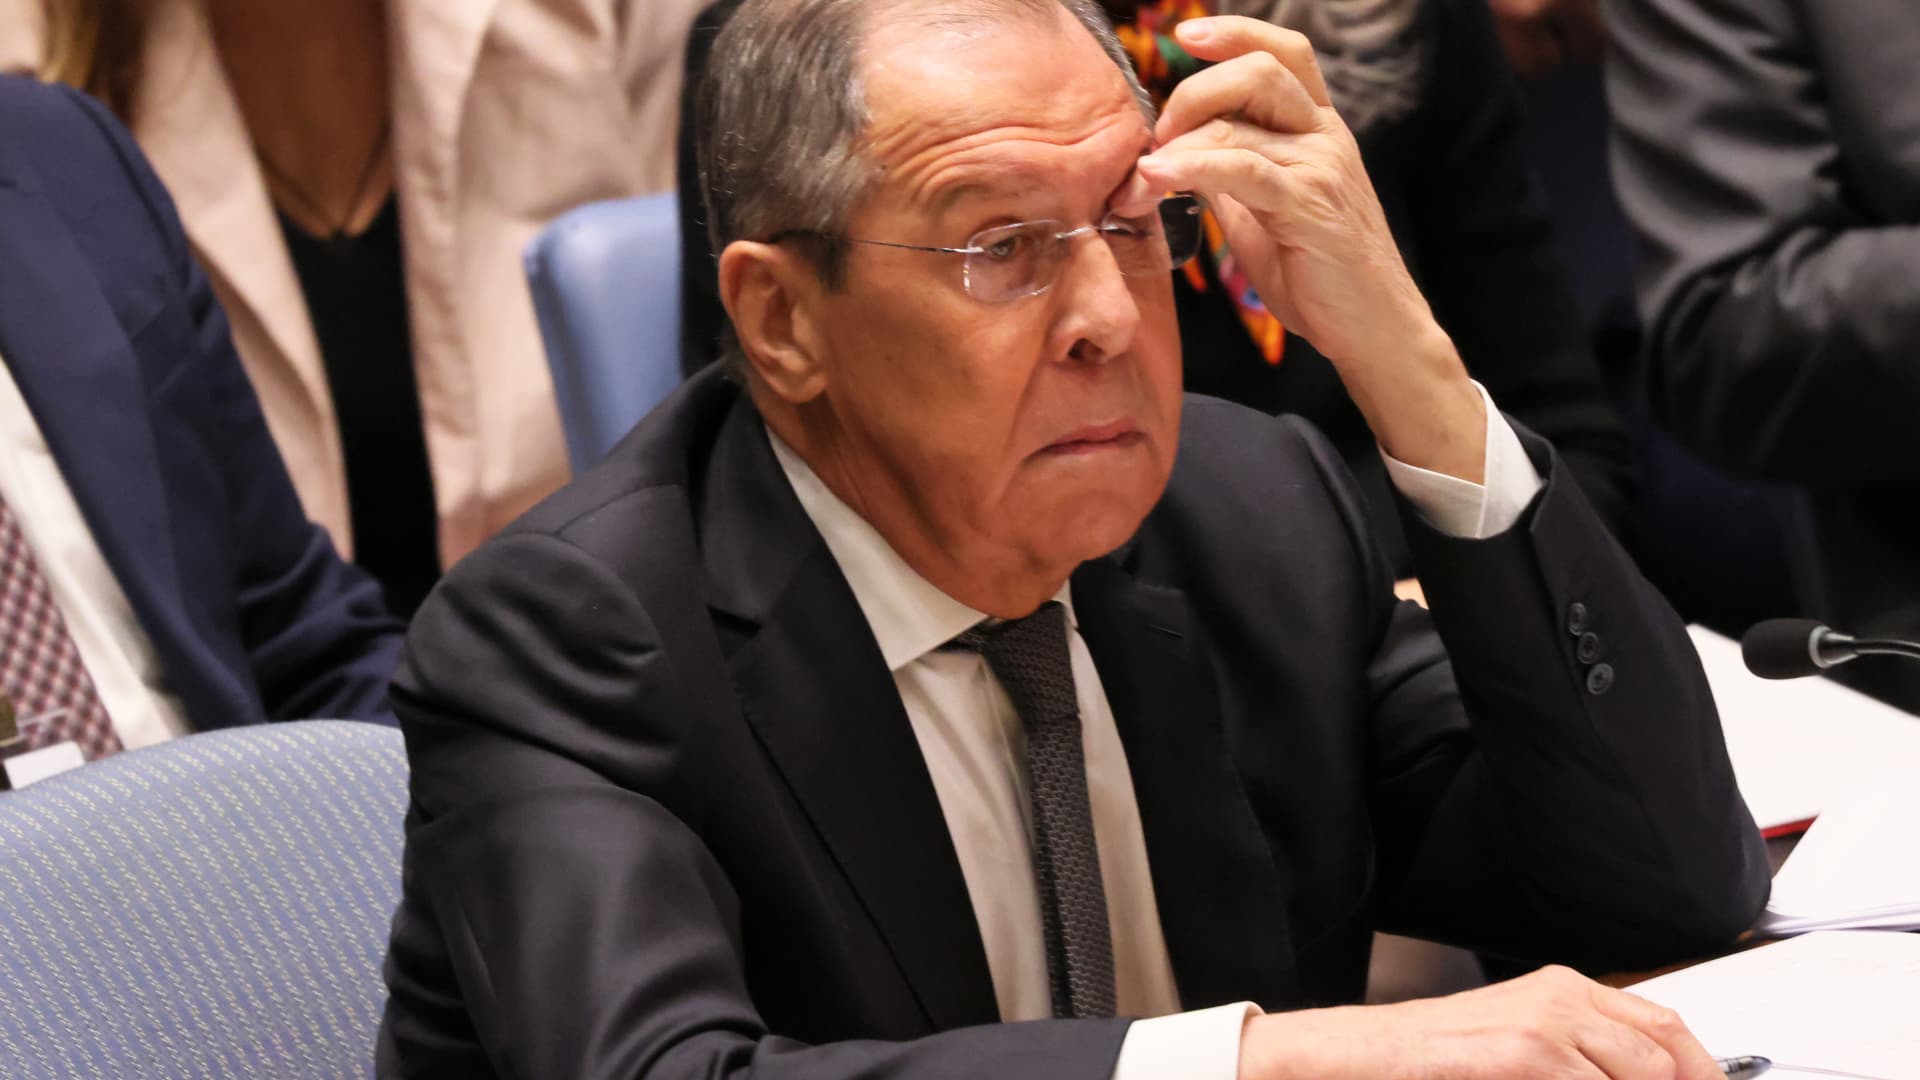 Lavrov receives criticism for war in Ukraine at UN